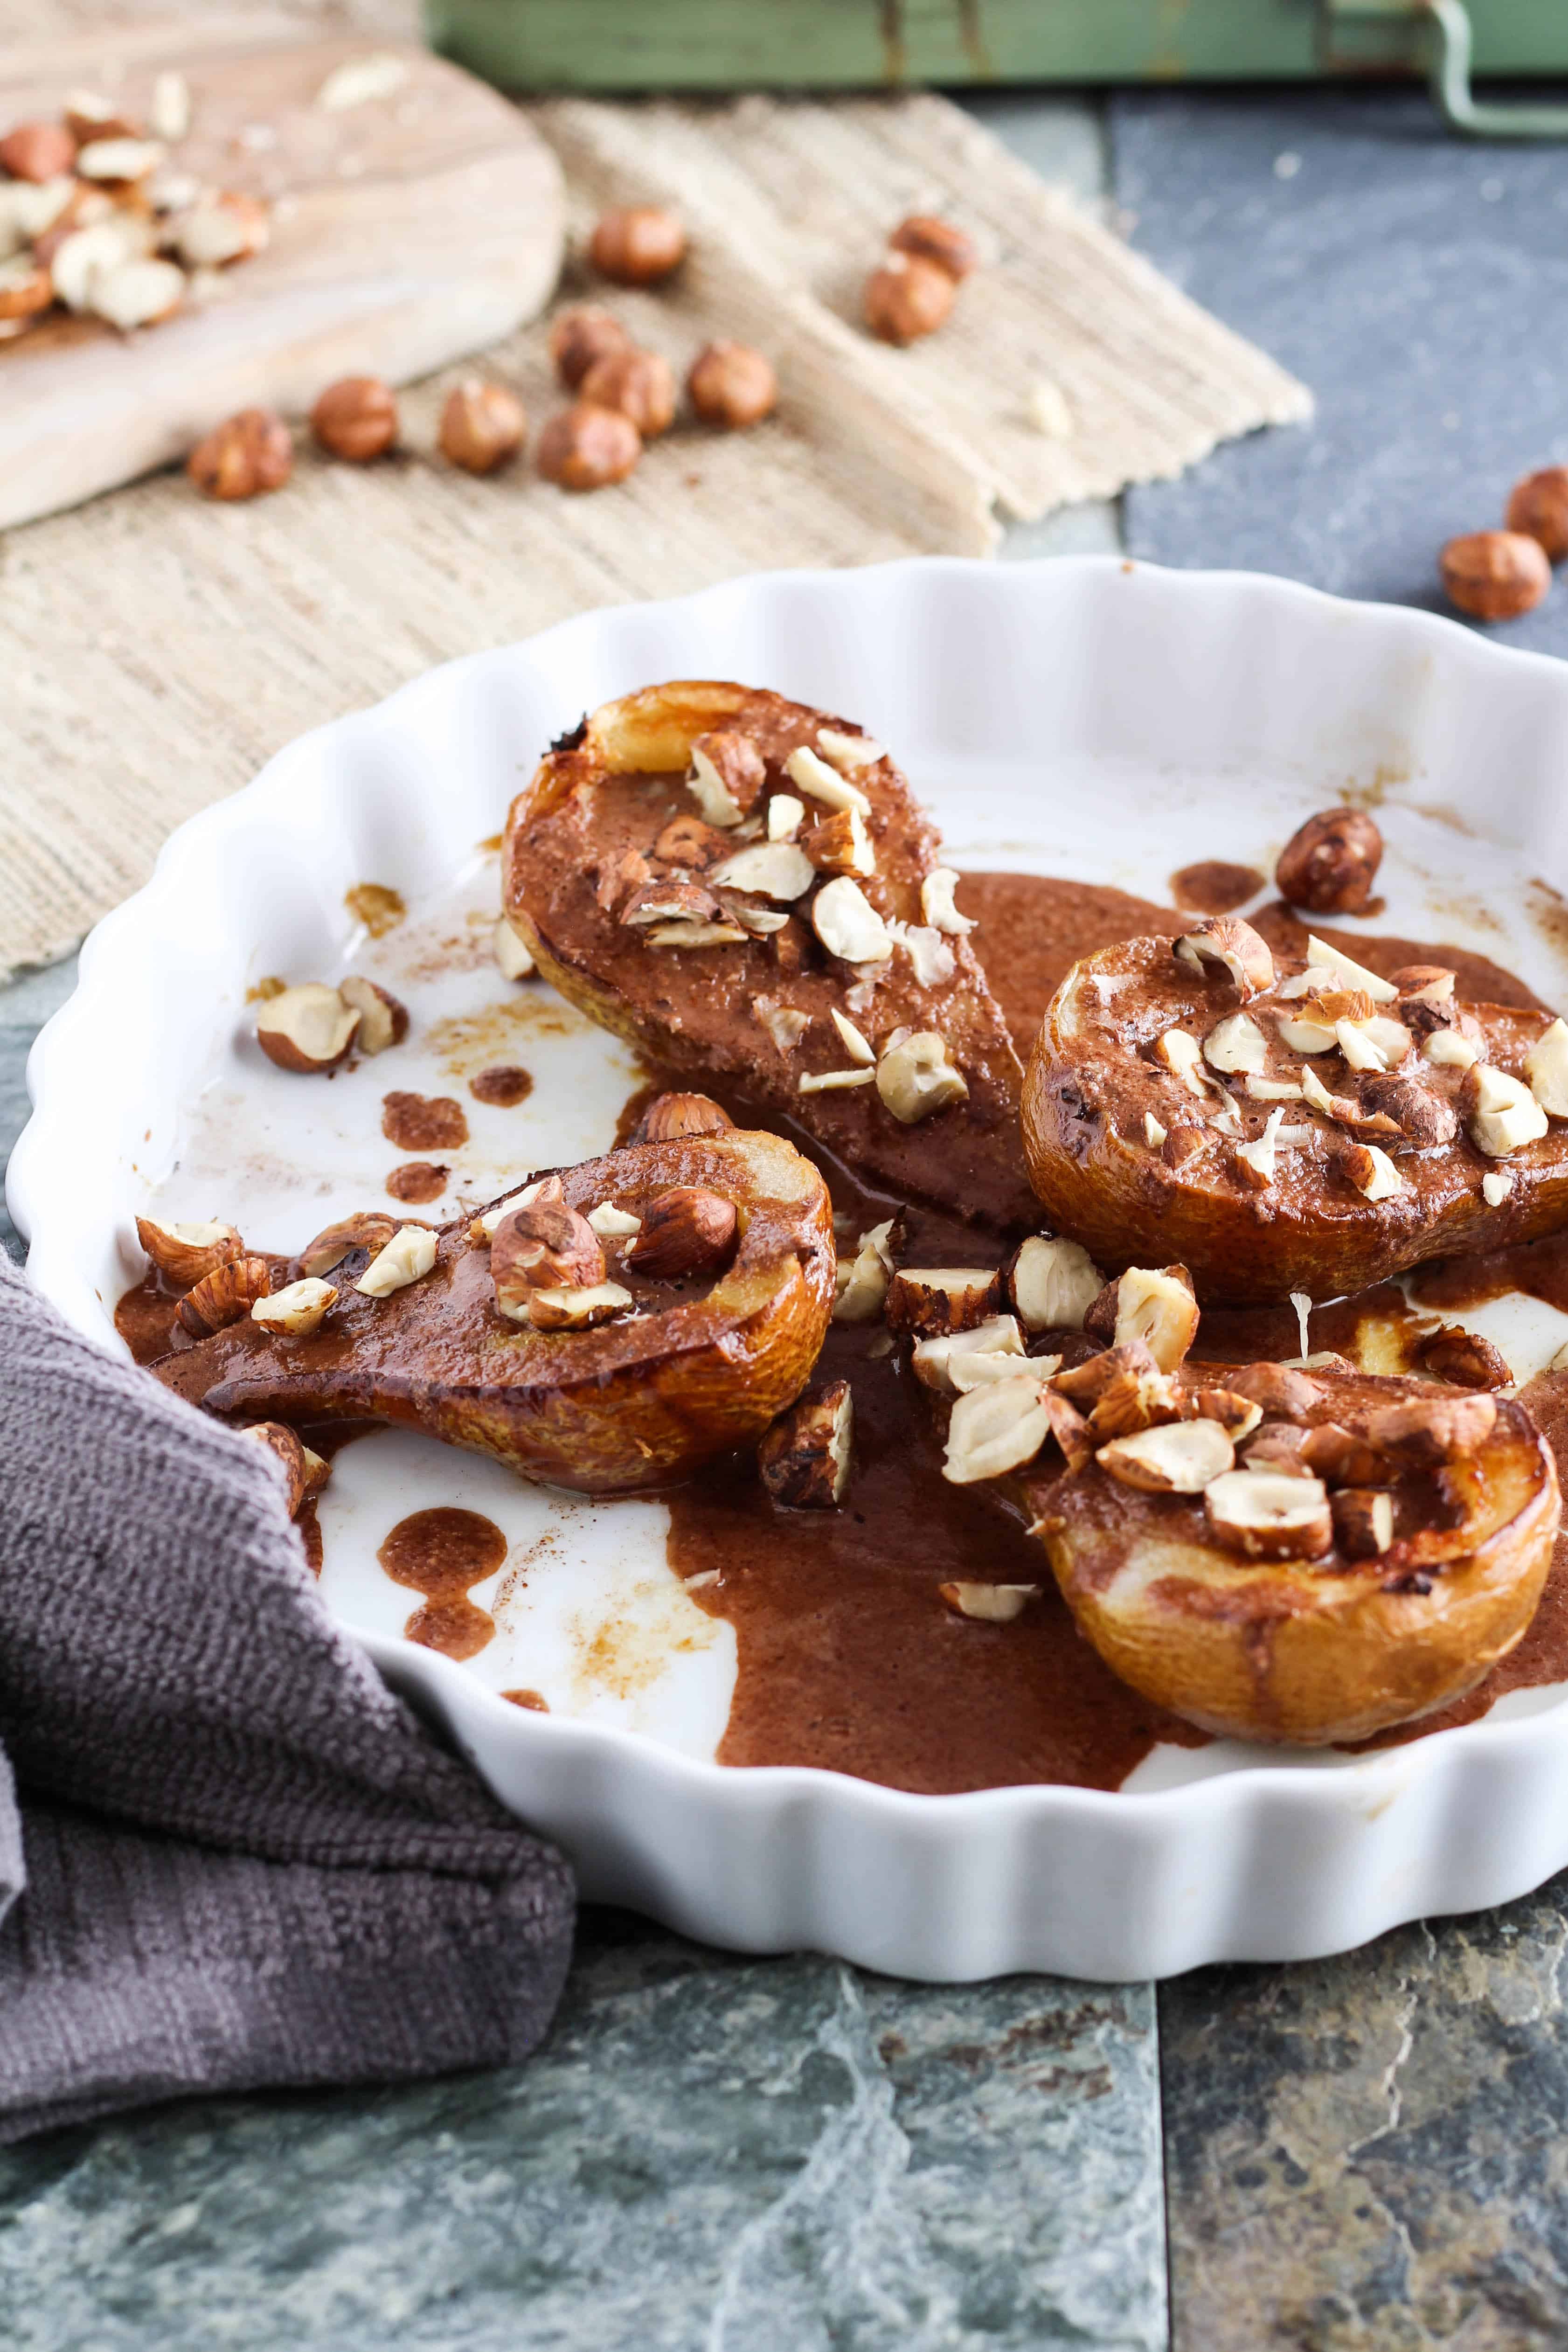 Baked Pears with Dark Chocolate Hazelnut Sauce - a delicious vegan dessert for fall. Recipe from www.gratefulgrazer.com